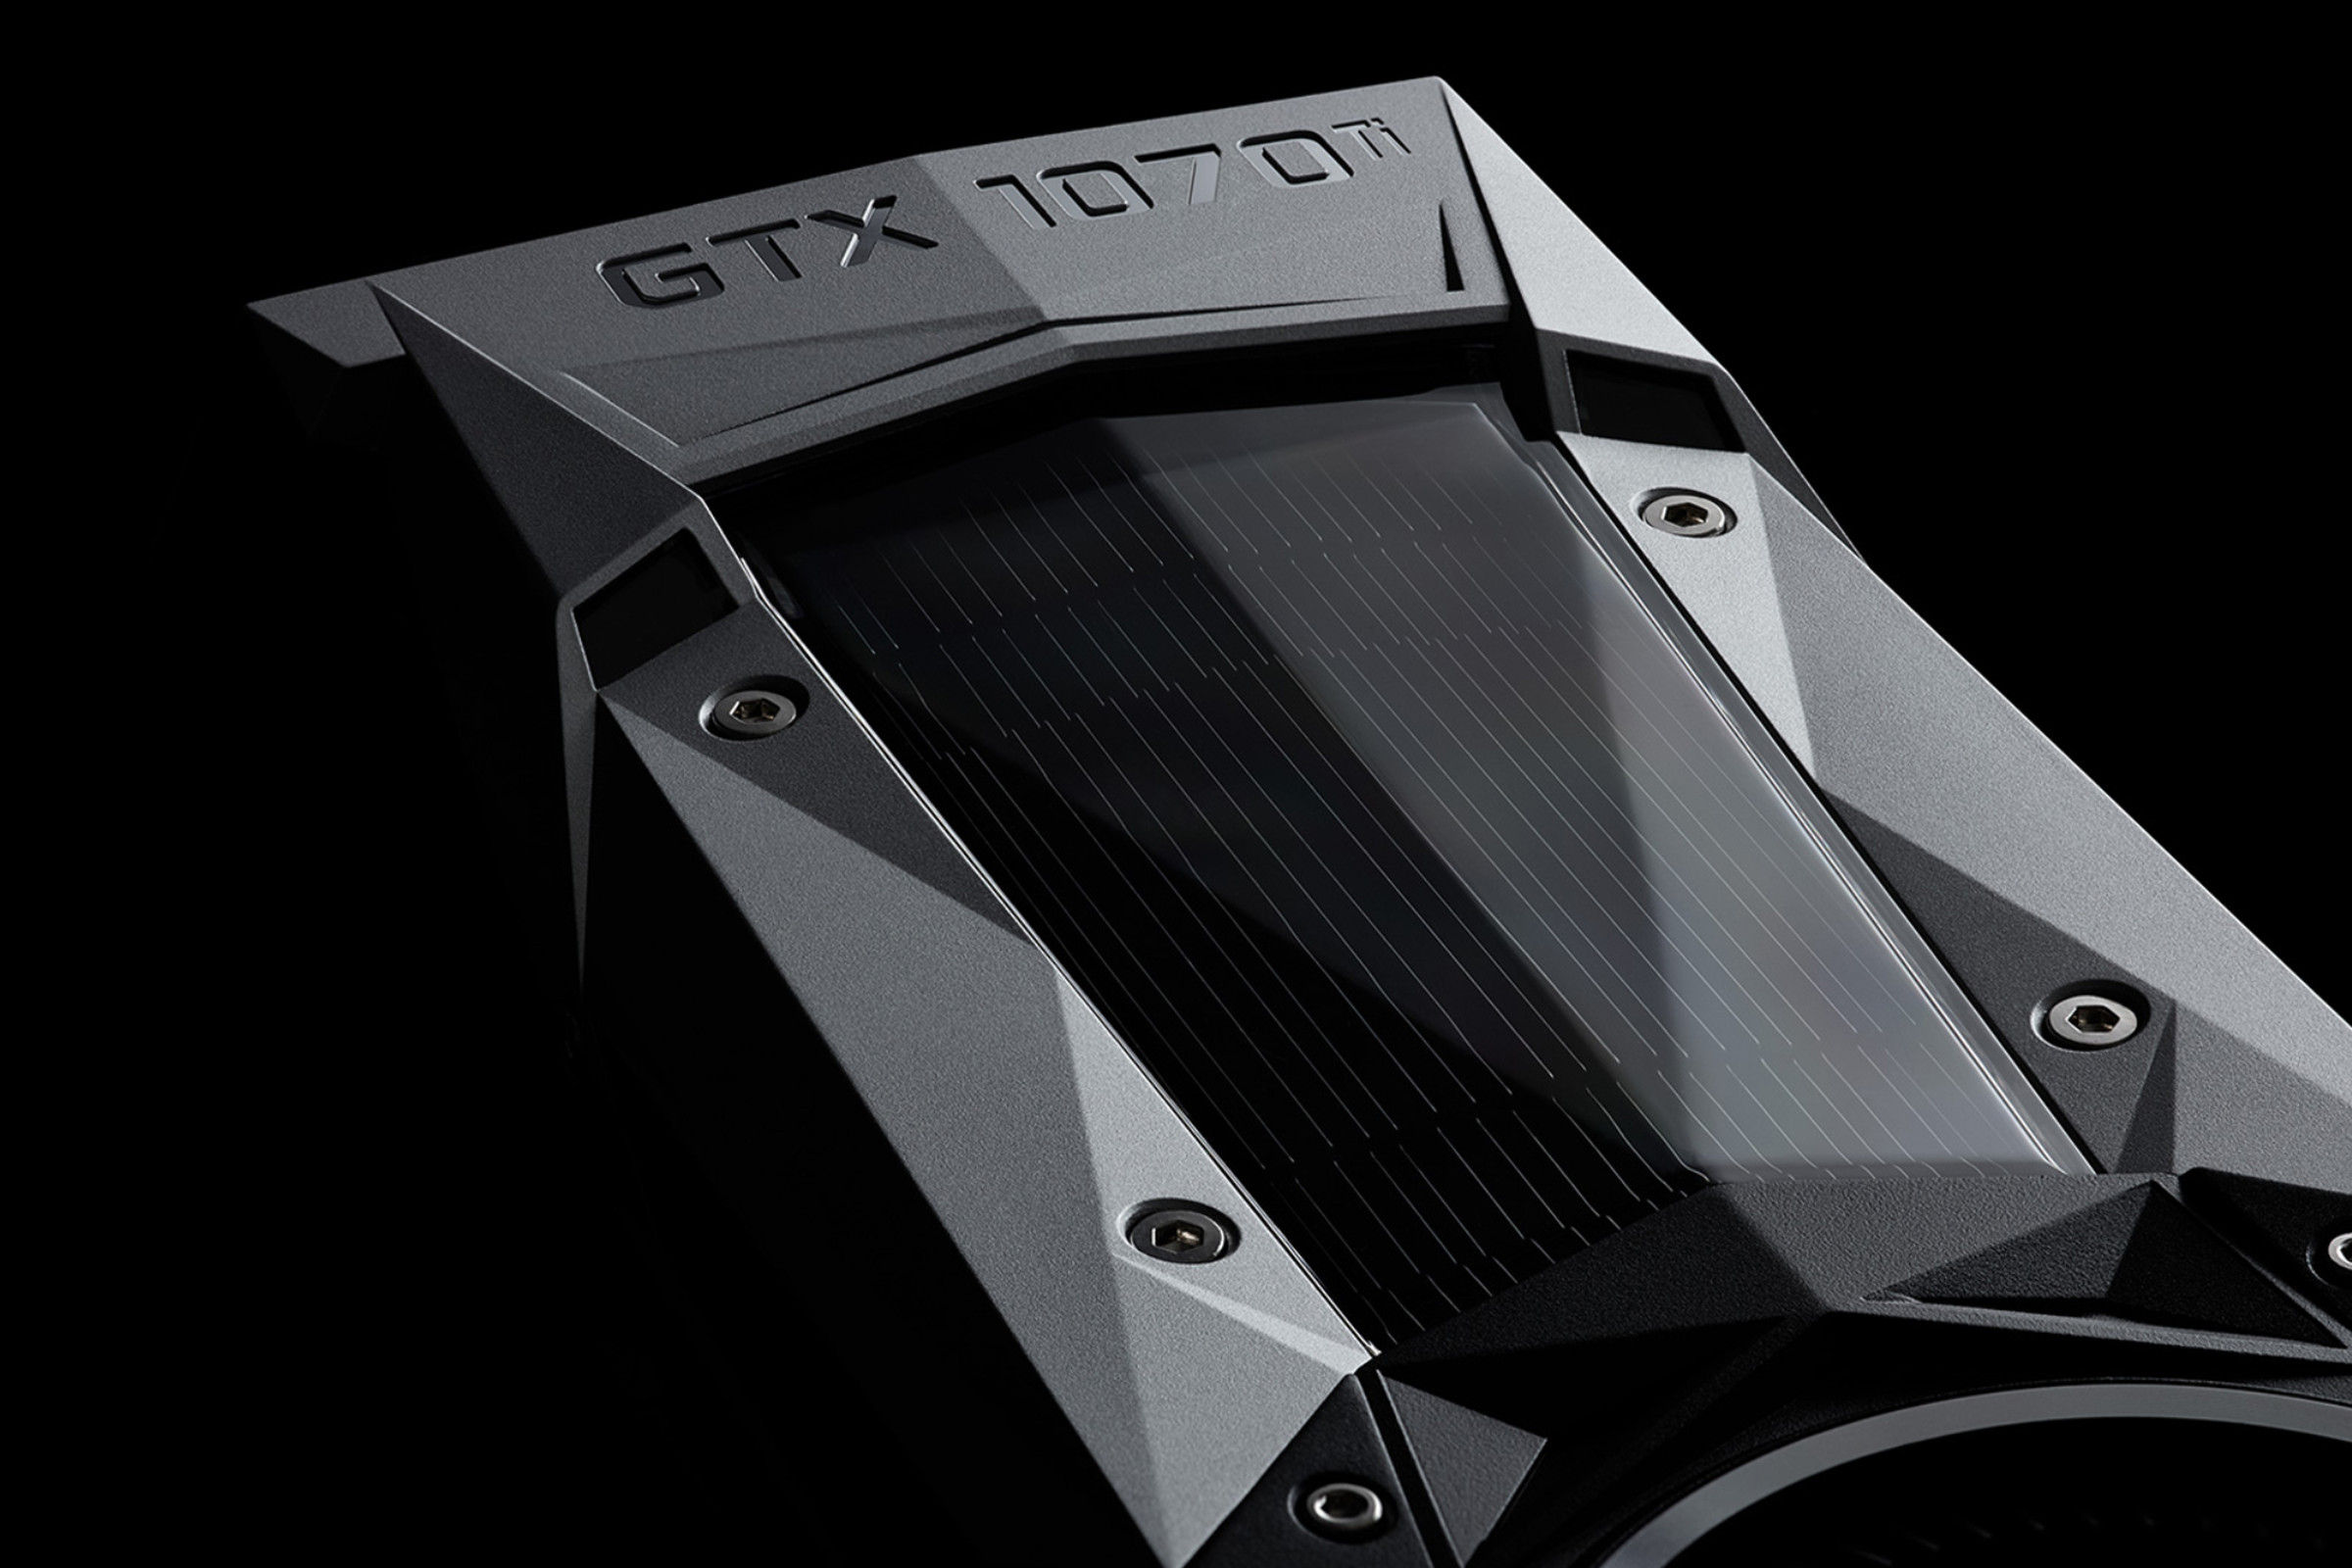 The GTX 1070 Ti graphics card